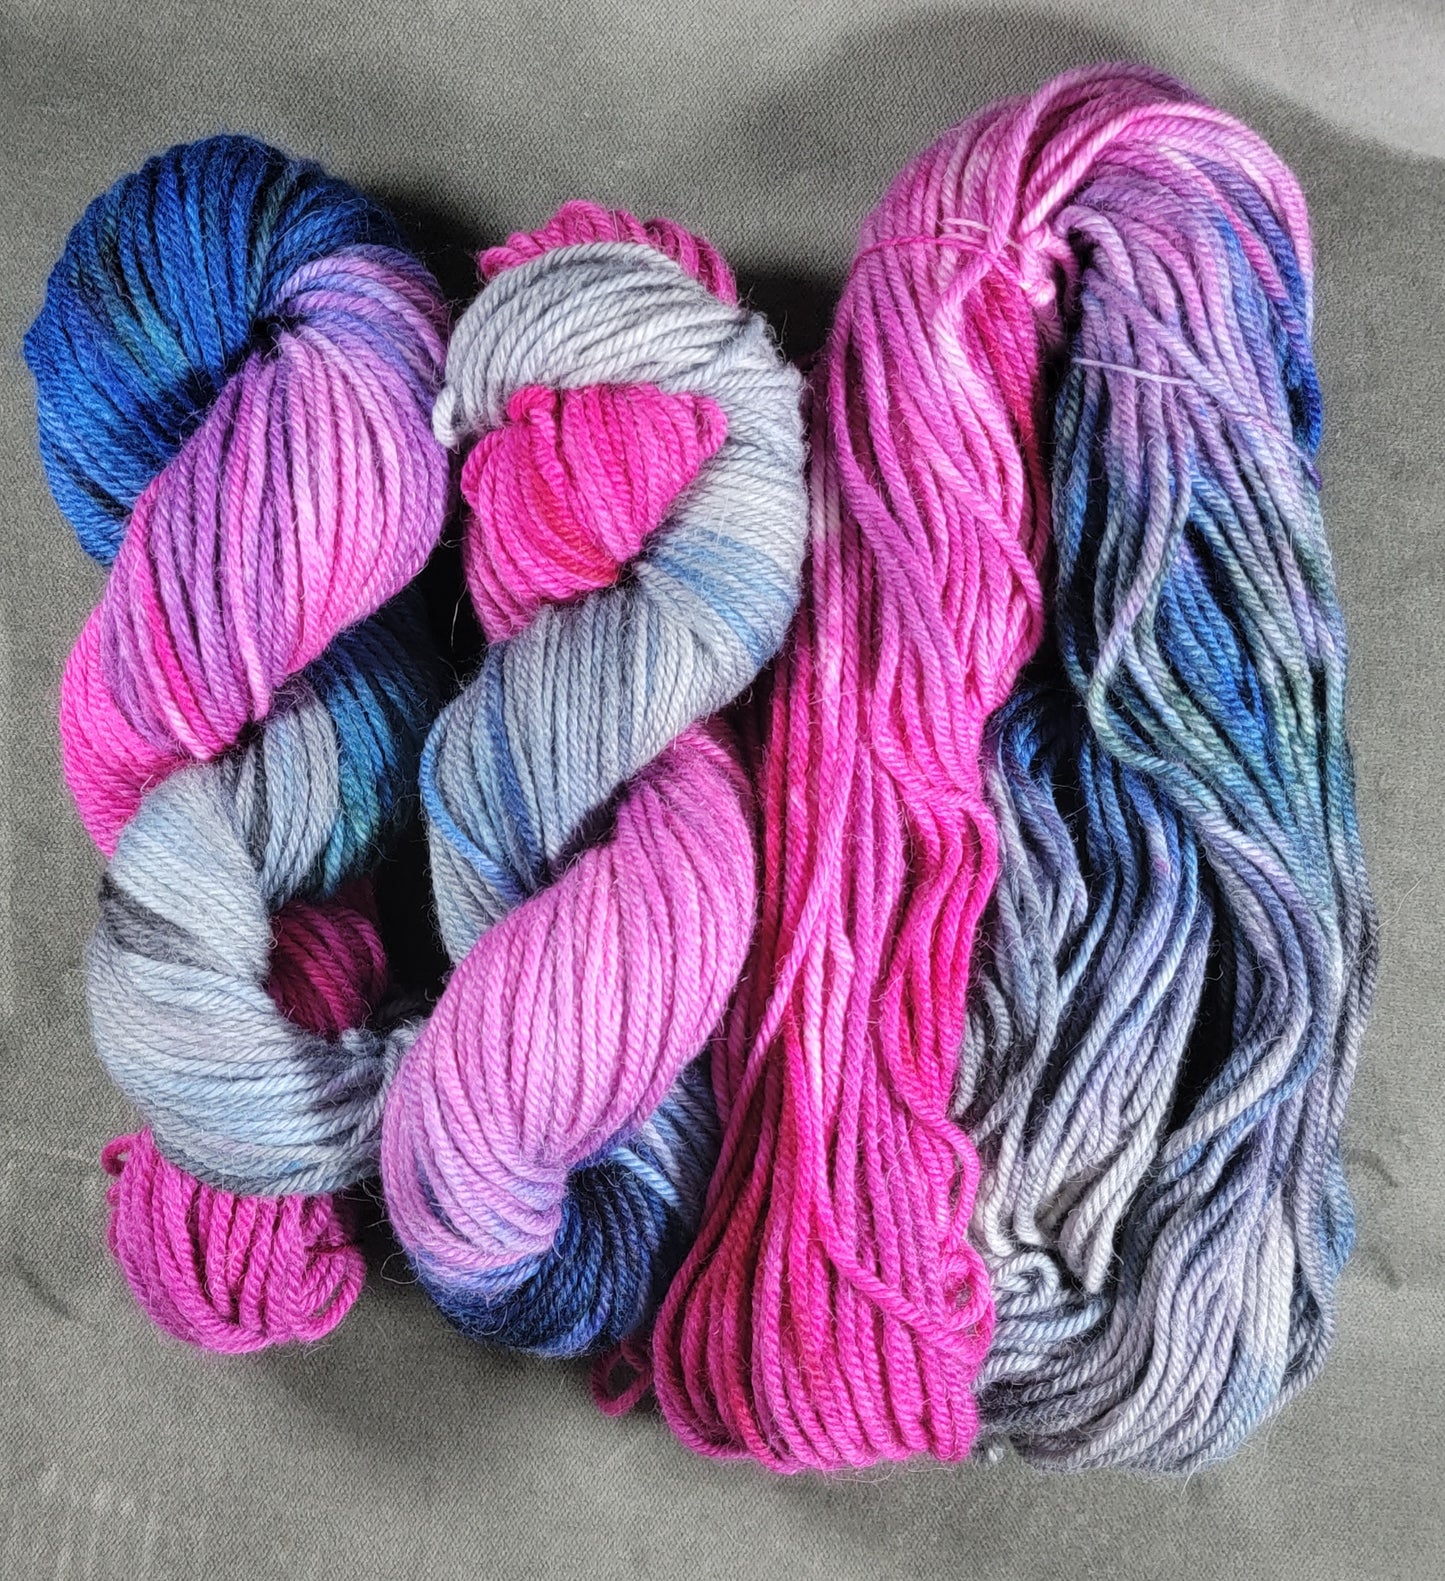 Hand Dyed Peruvian Highland Wool-Superfine Alpaca Yarn (NY)/Bulky